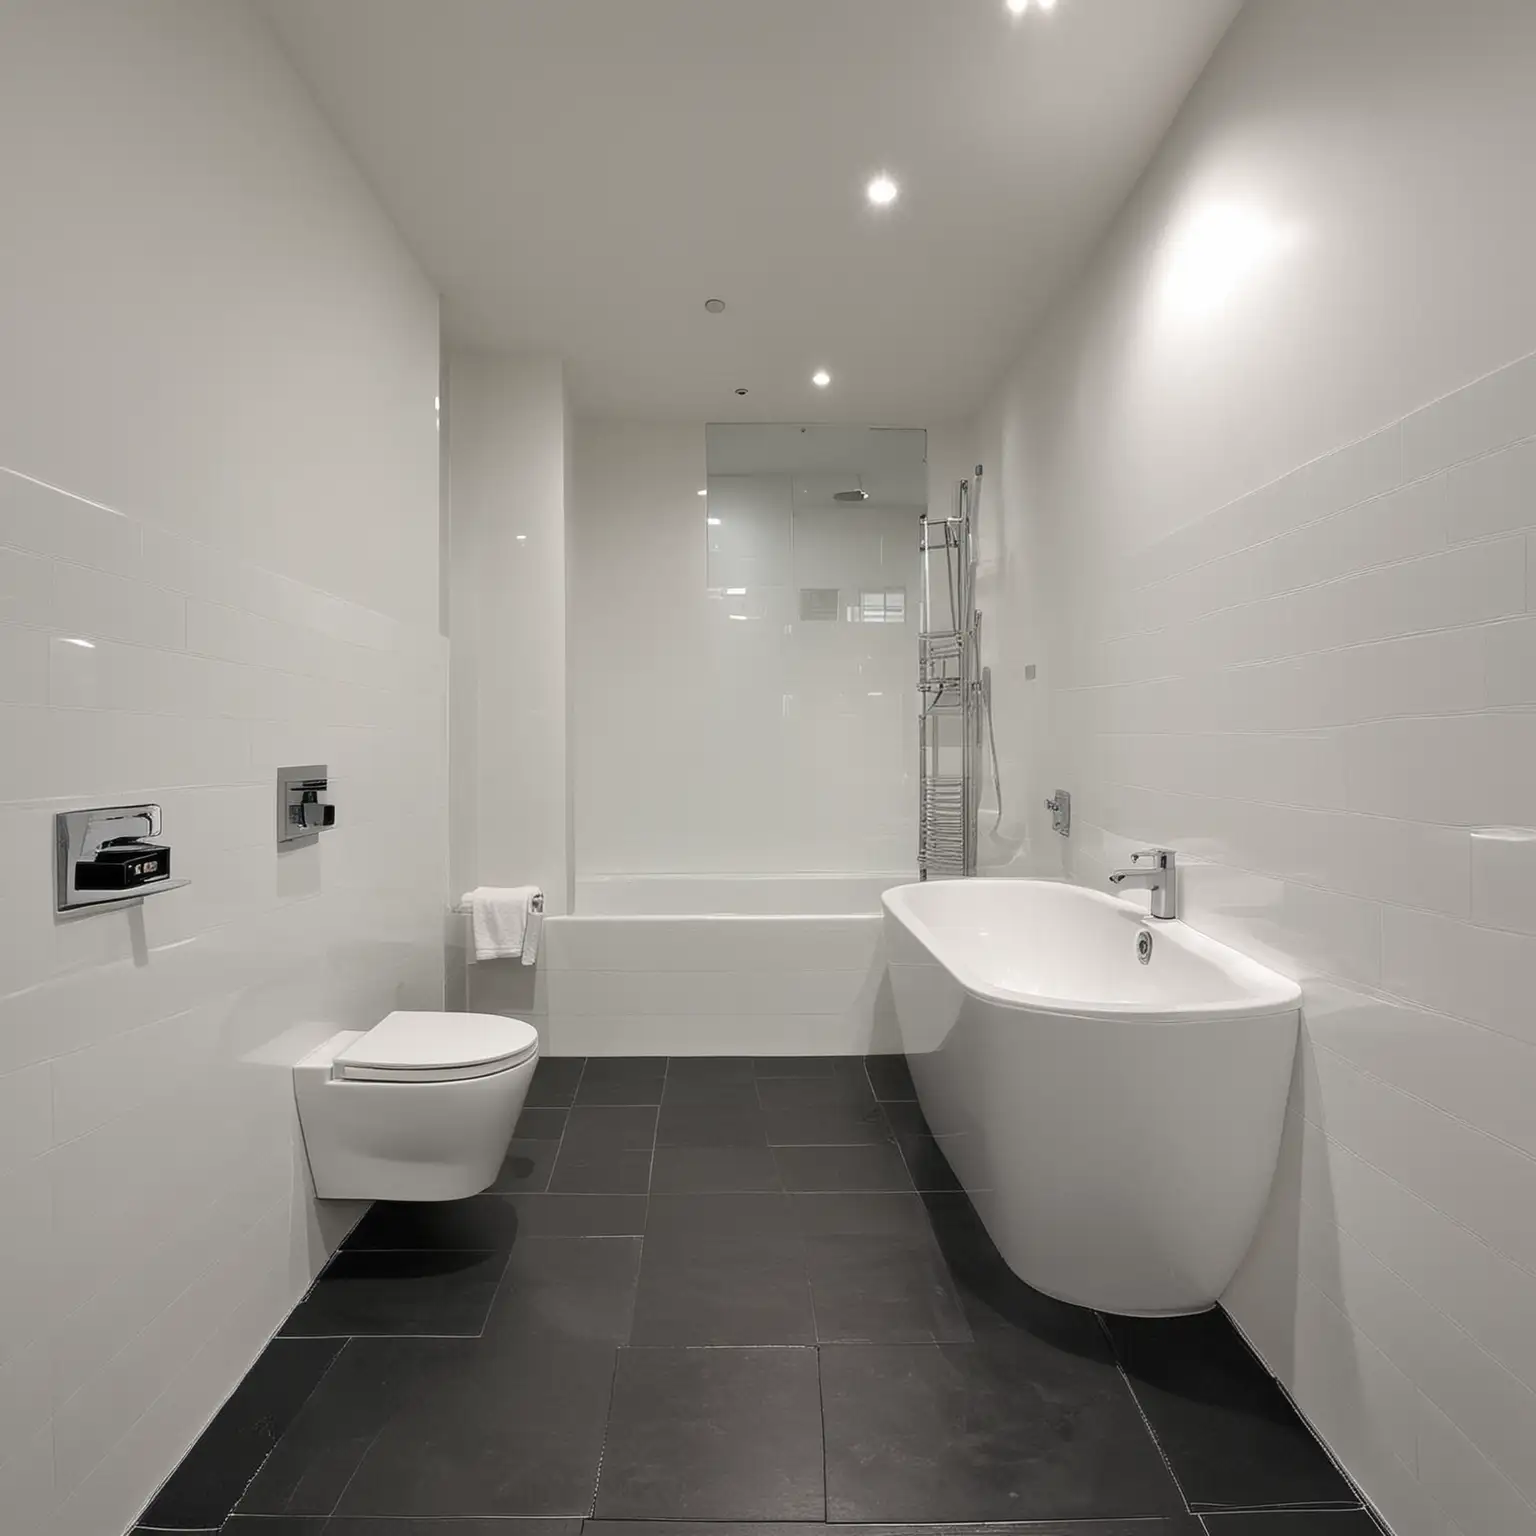 toilet and bath room, 4 white  wall, light black ceramic floor.